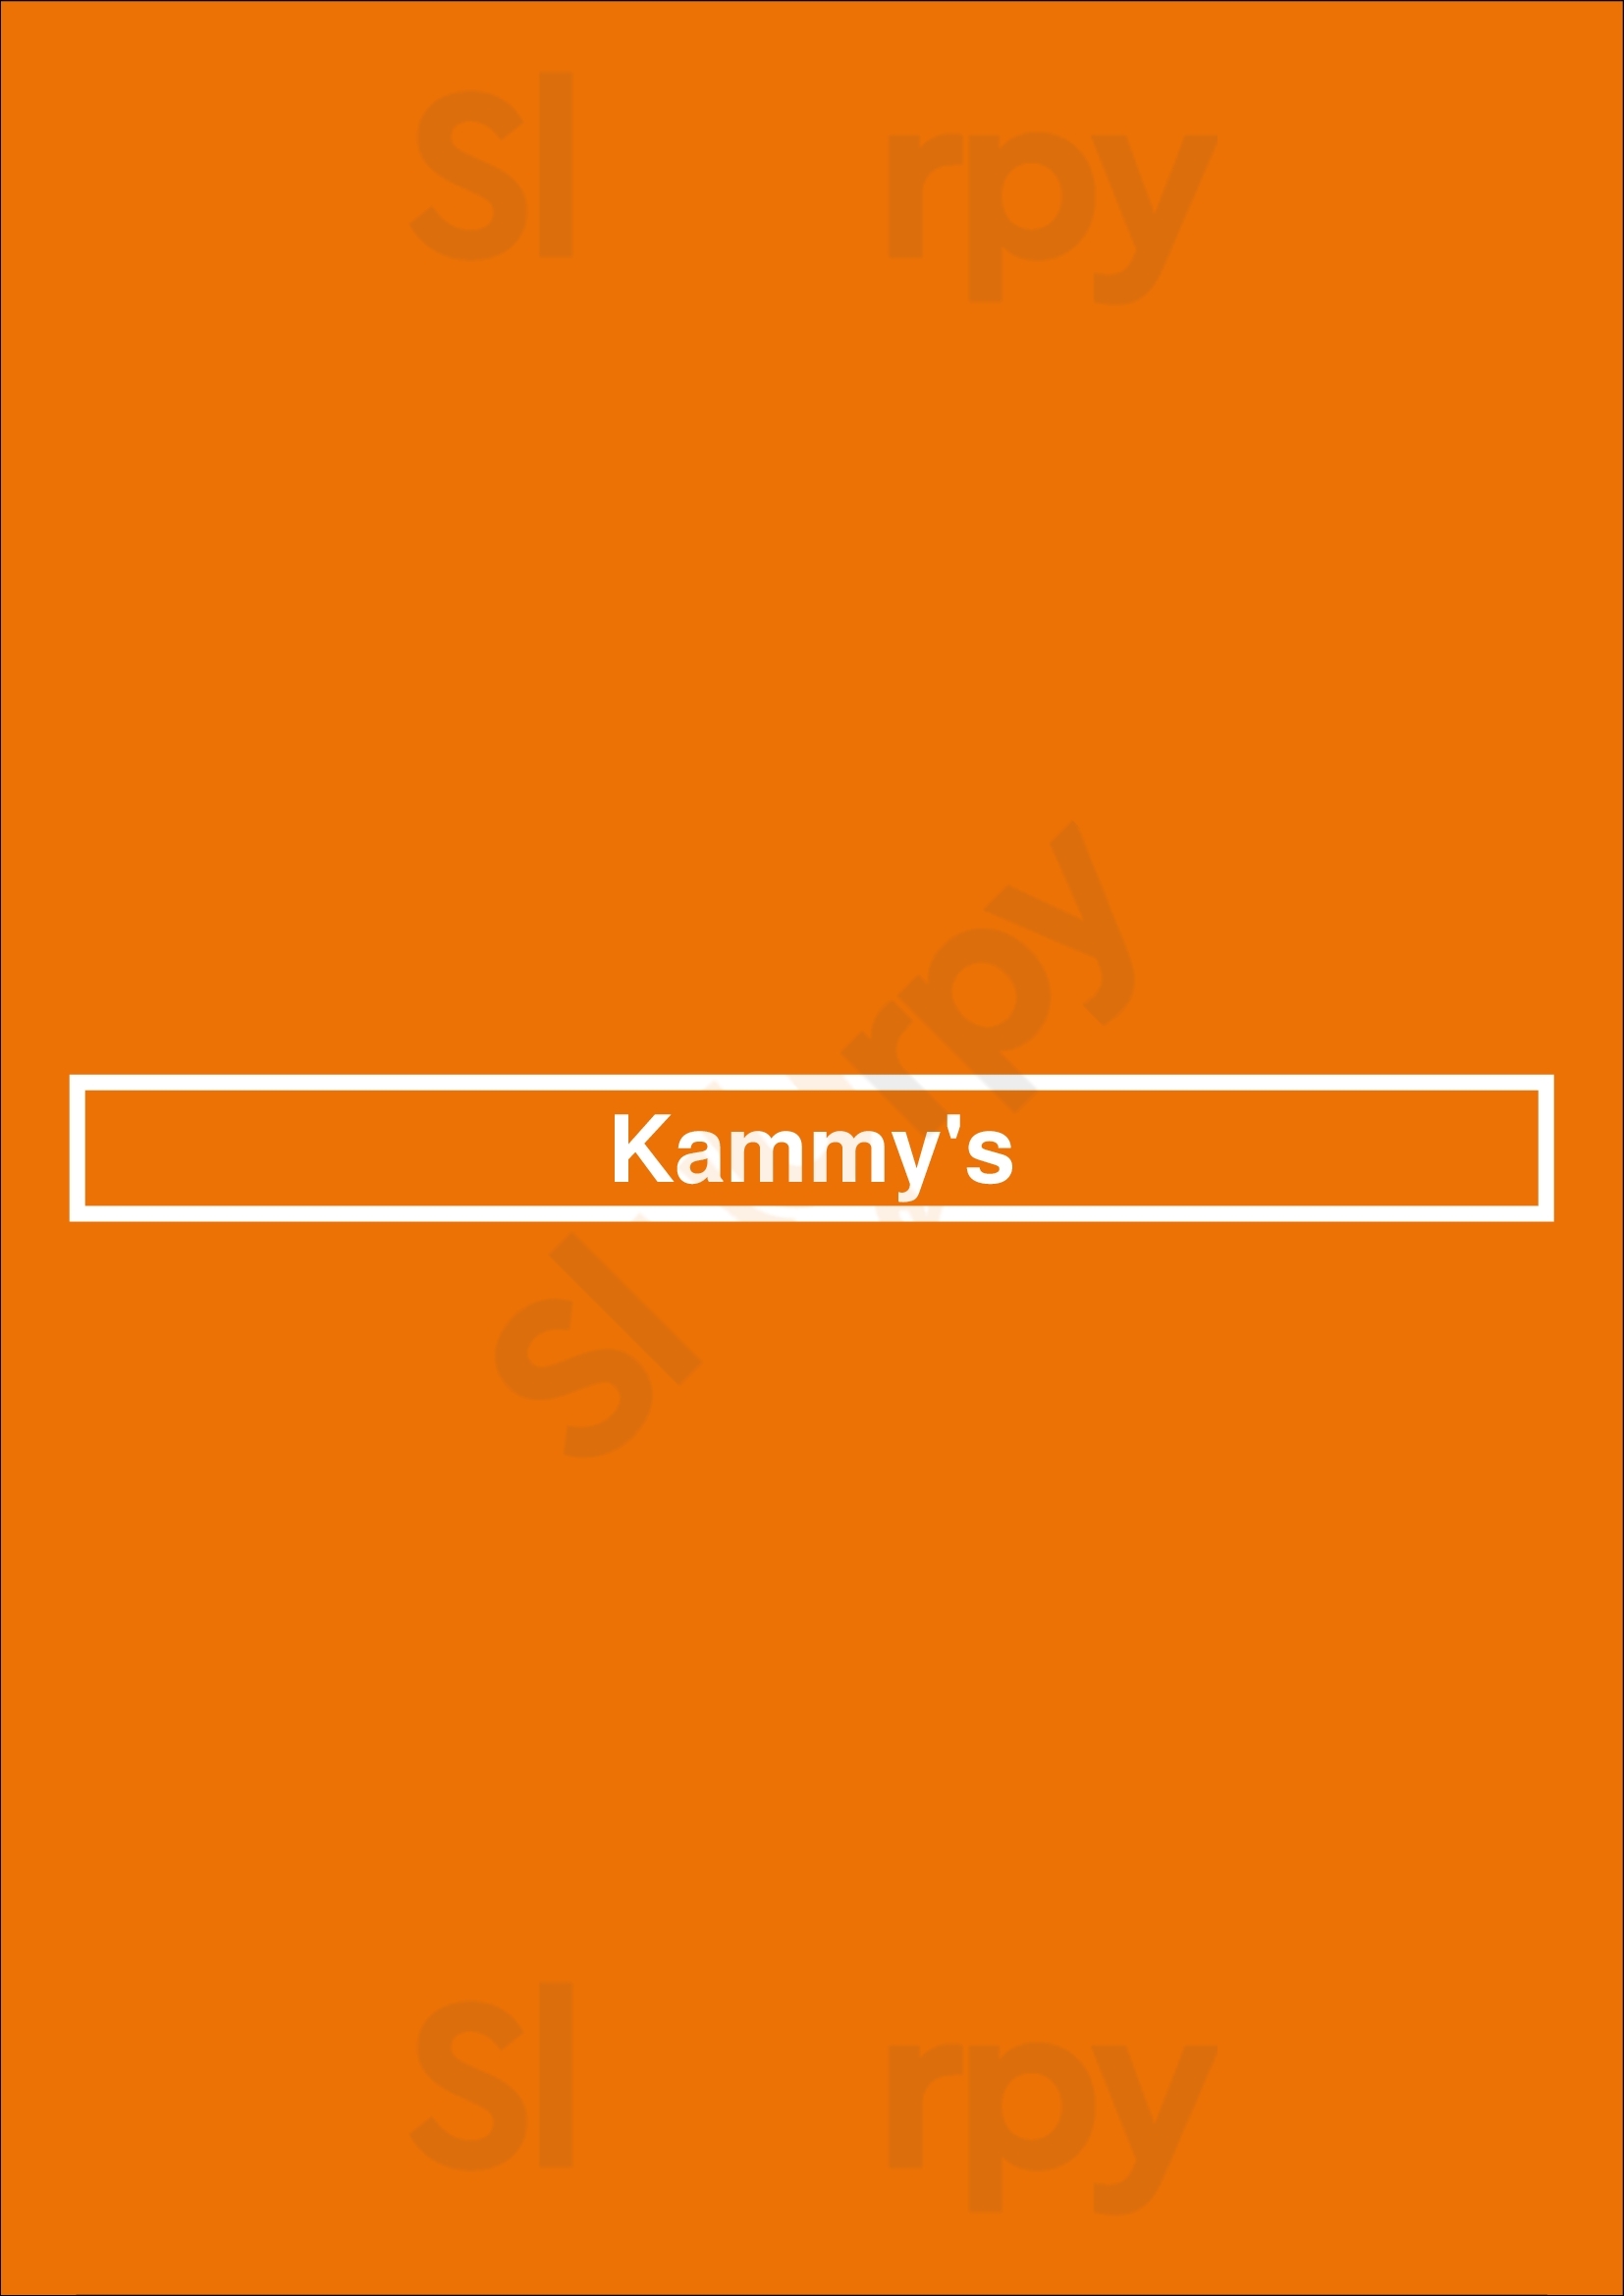 Kammy's Montreal Menu - 1